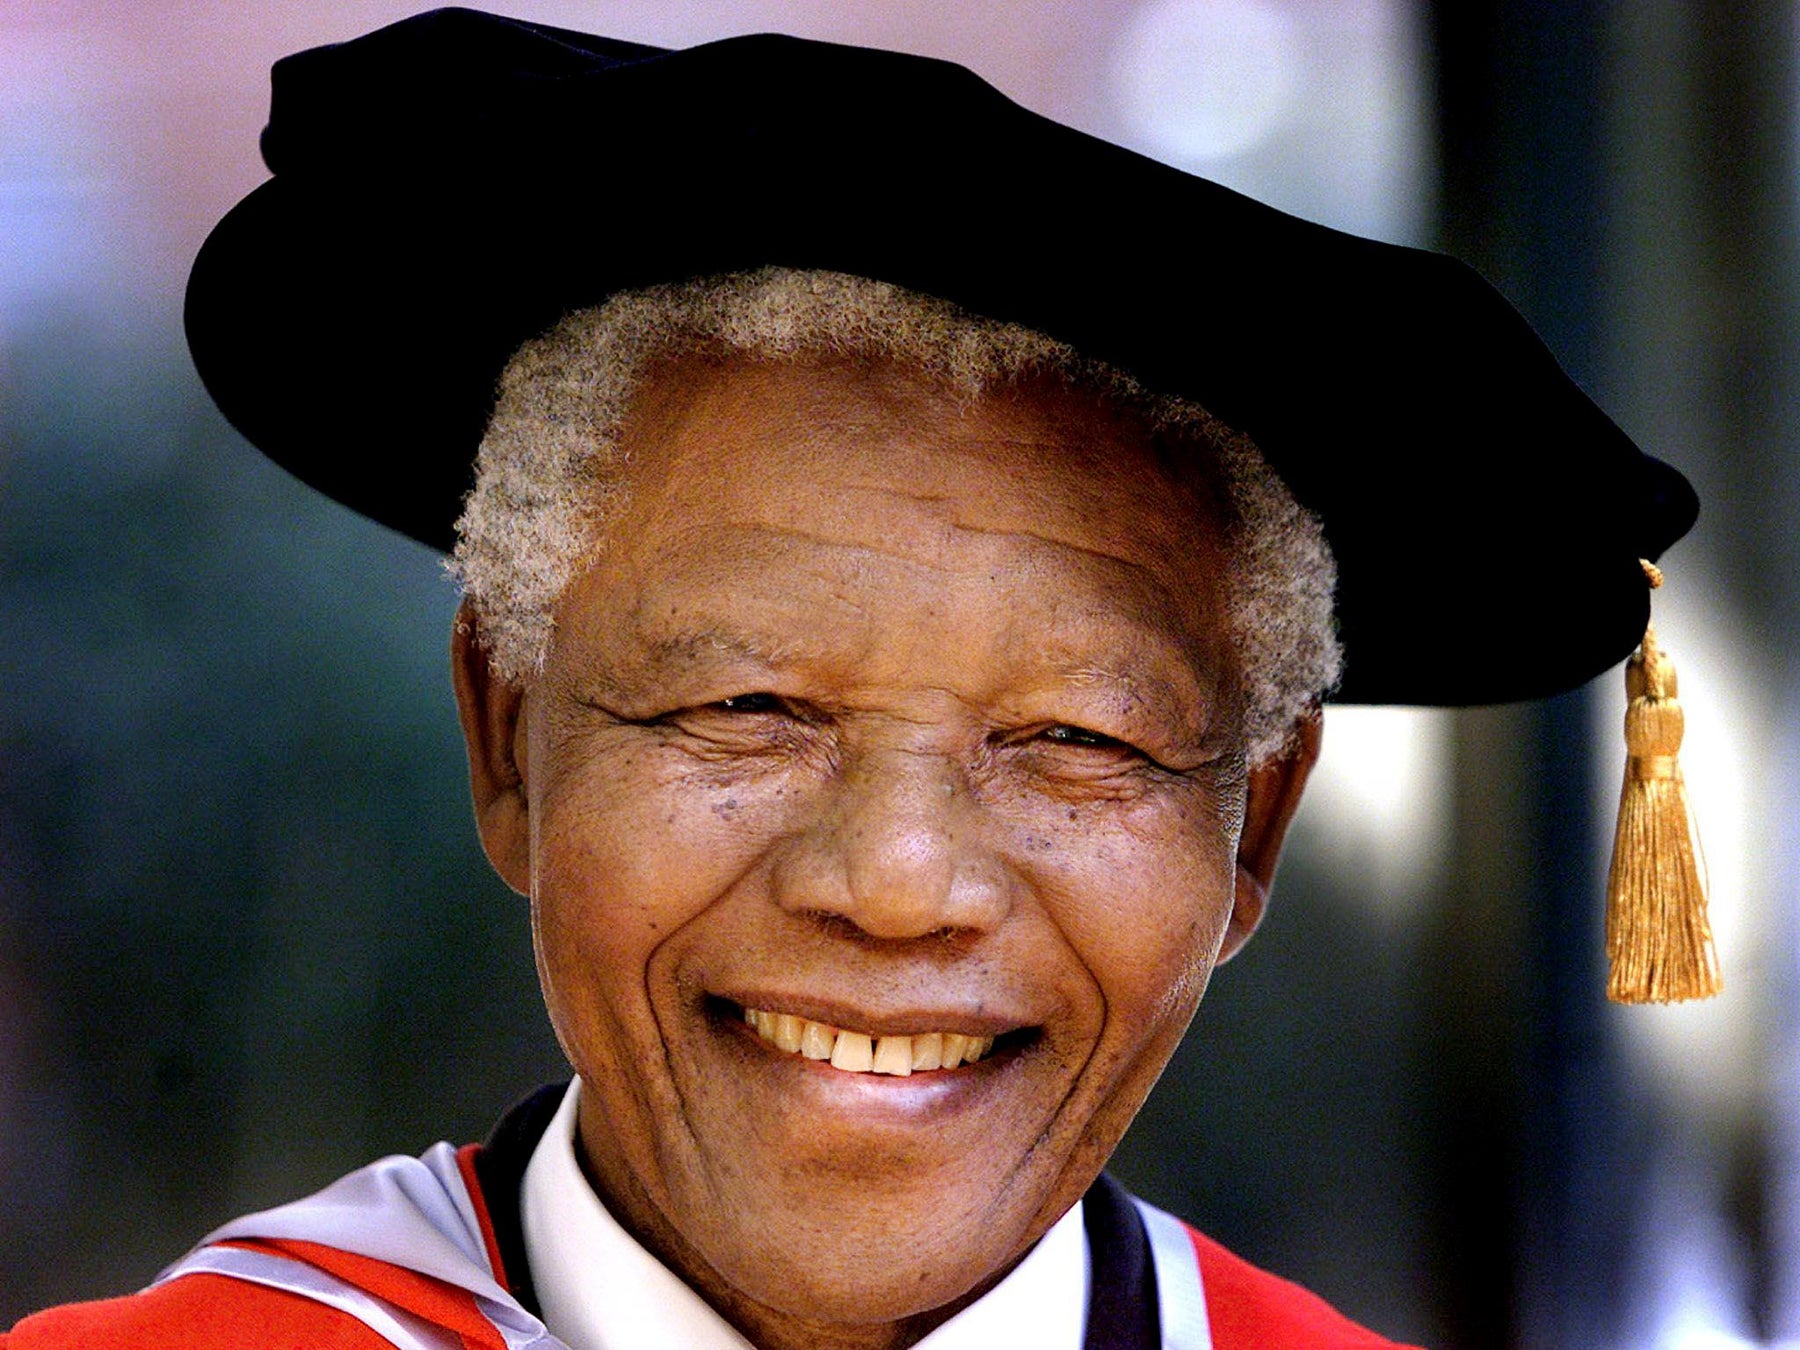 How Has Mandela's Life Inspired You?